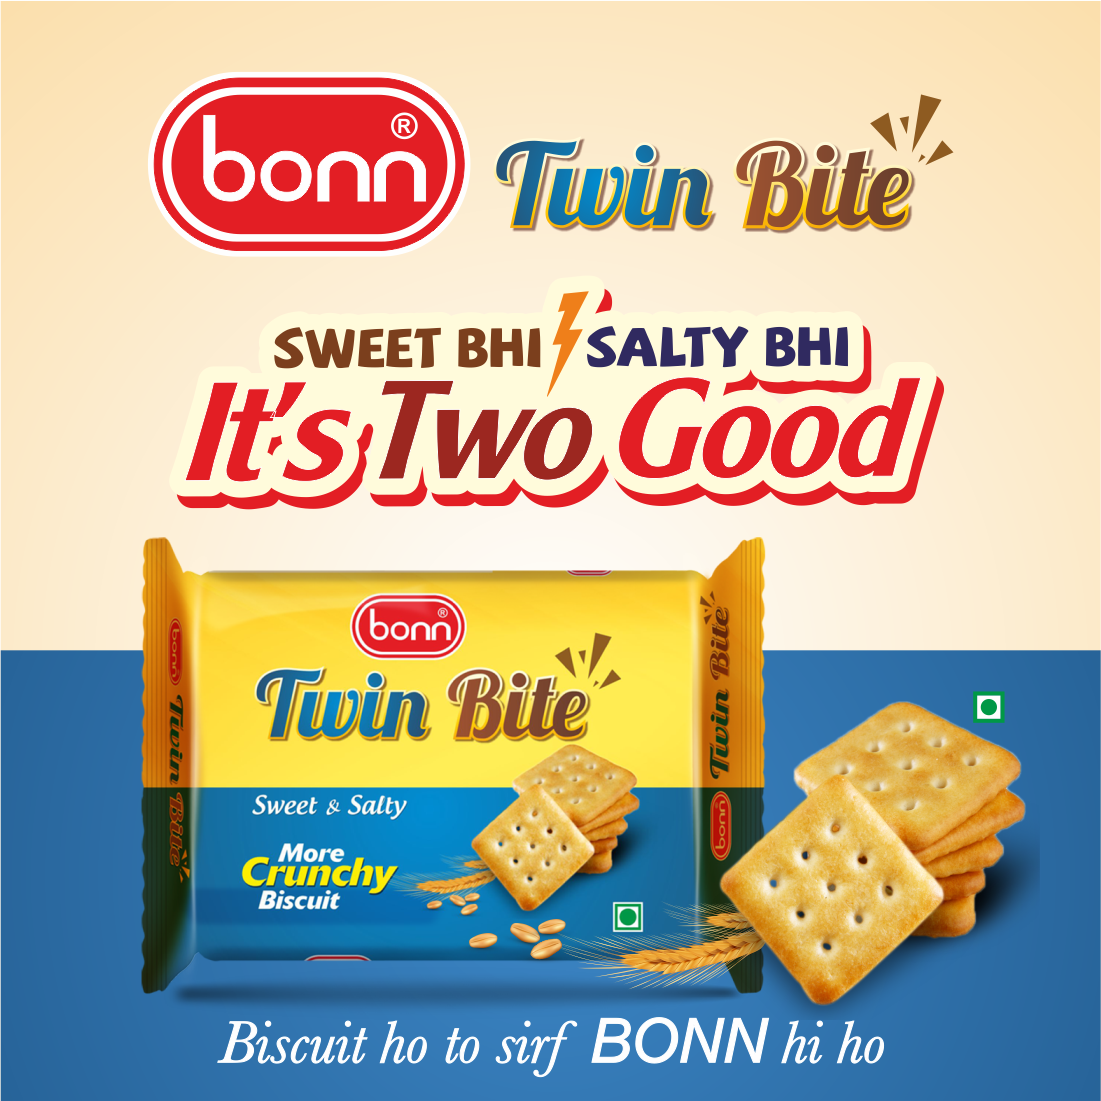 Bonn Twin Bite Sweet & Salty Biscuits